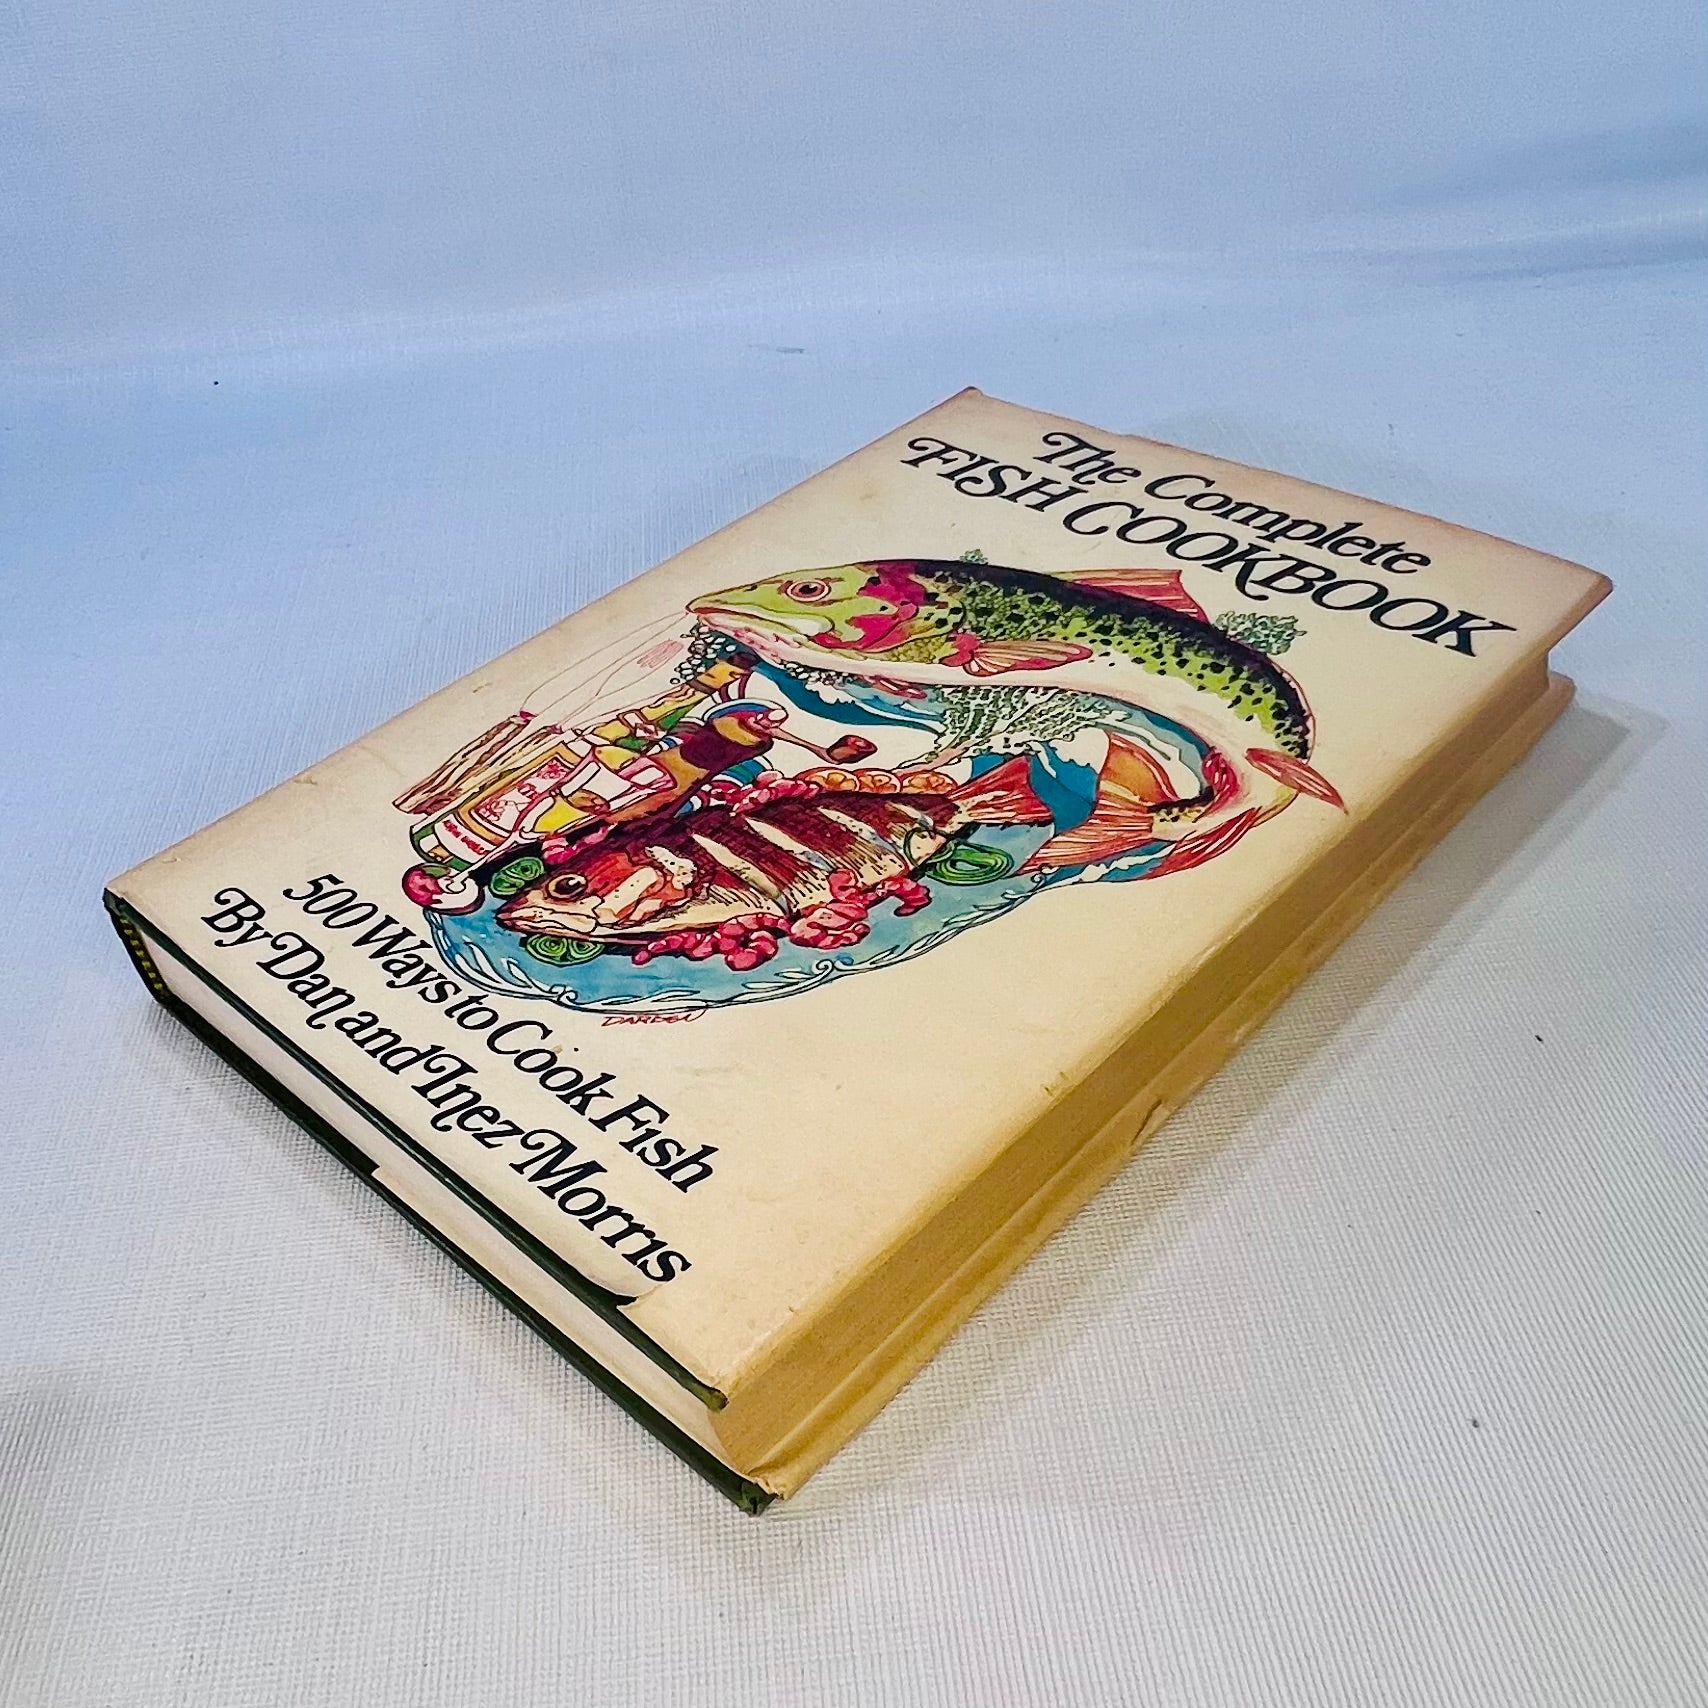 The Complete Fish Cookbook 500 Ways to Cook Fish by Dan & Inez Morris 1972 The Bobbs-Merril Company Inc.